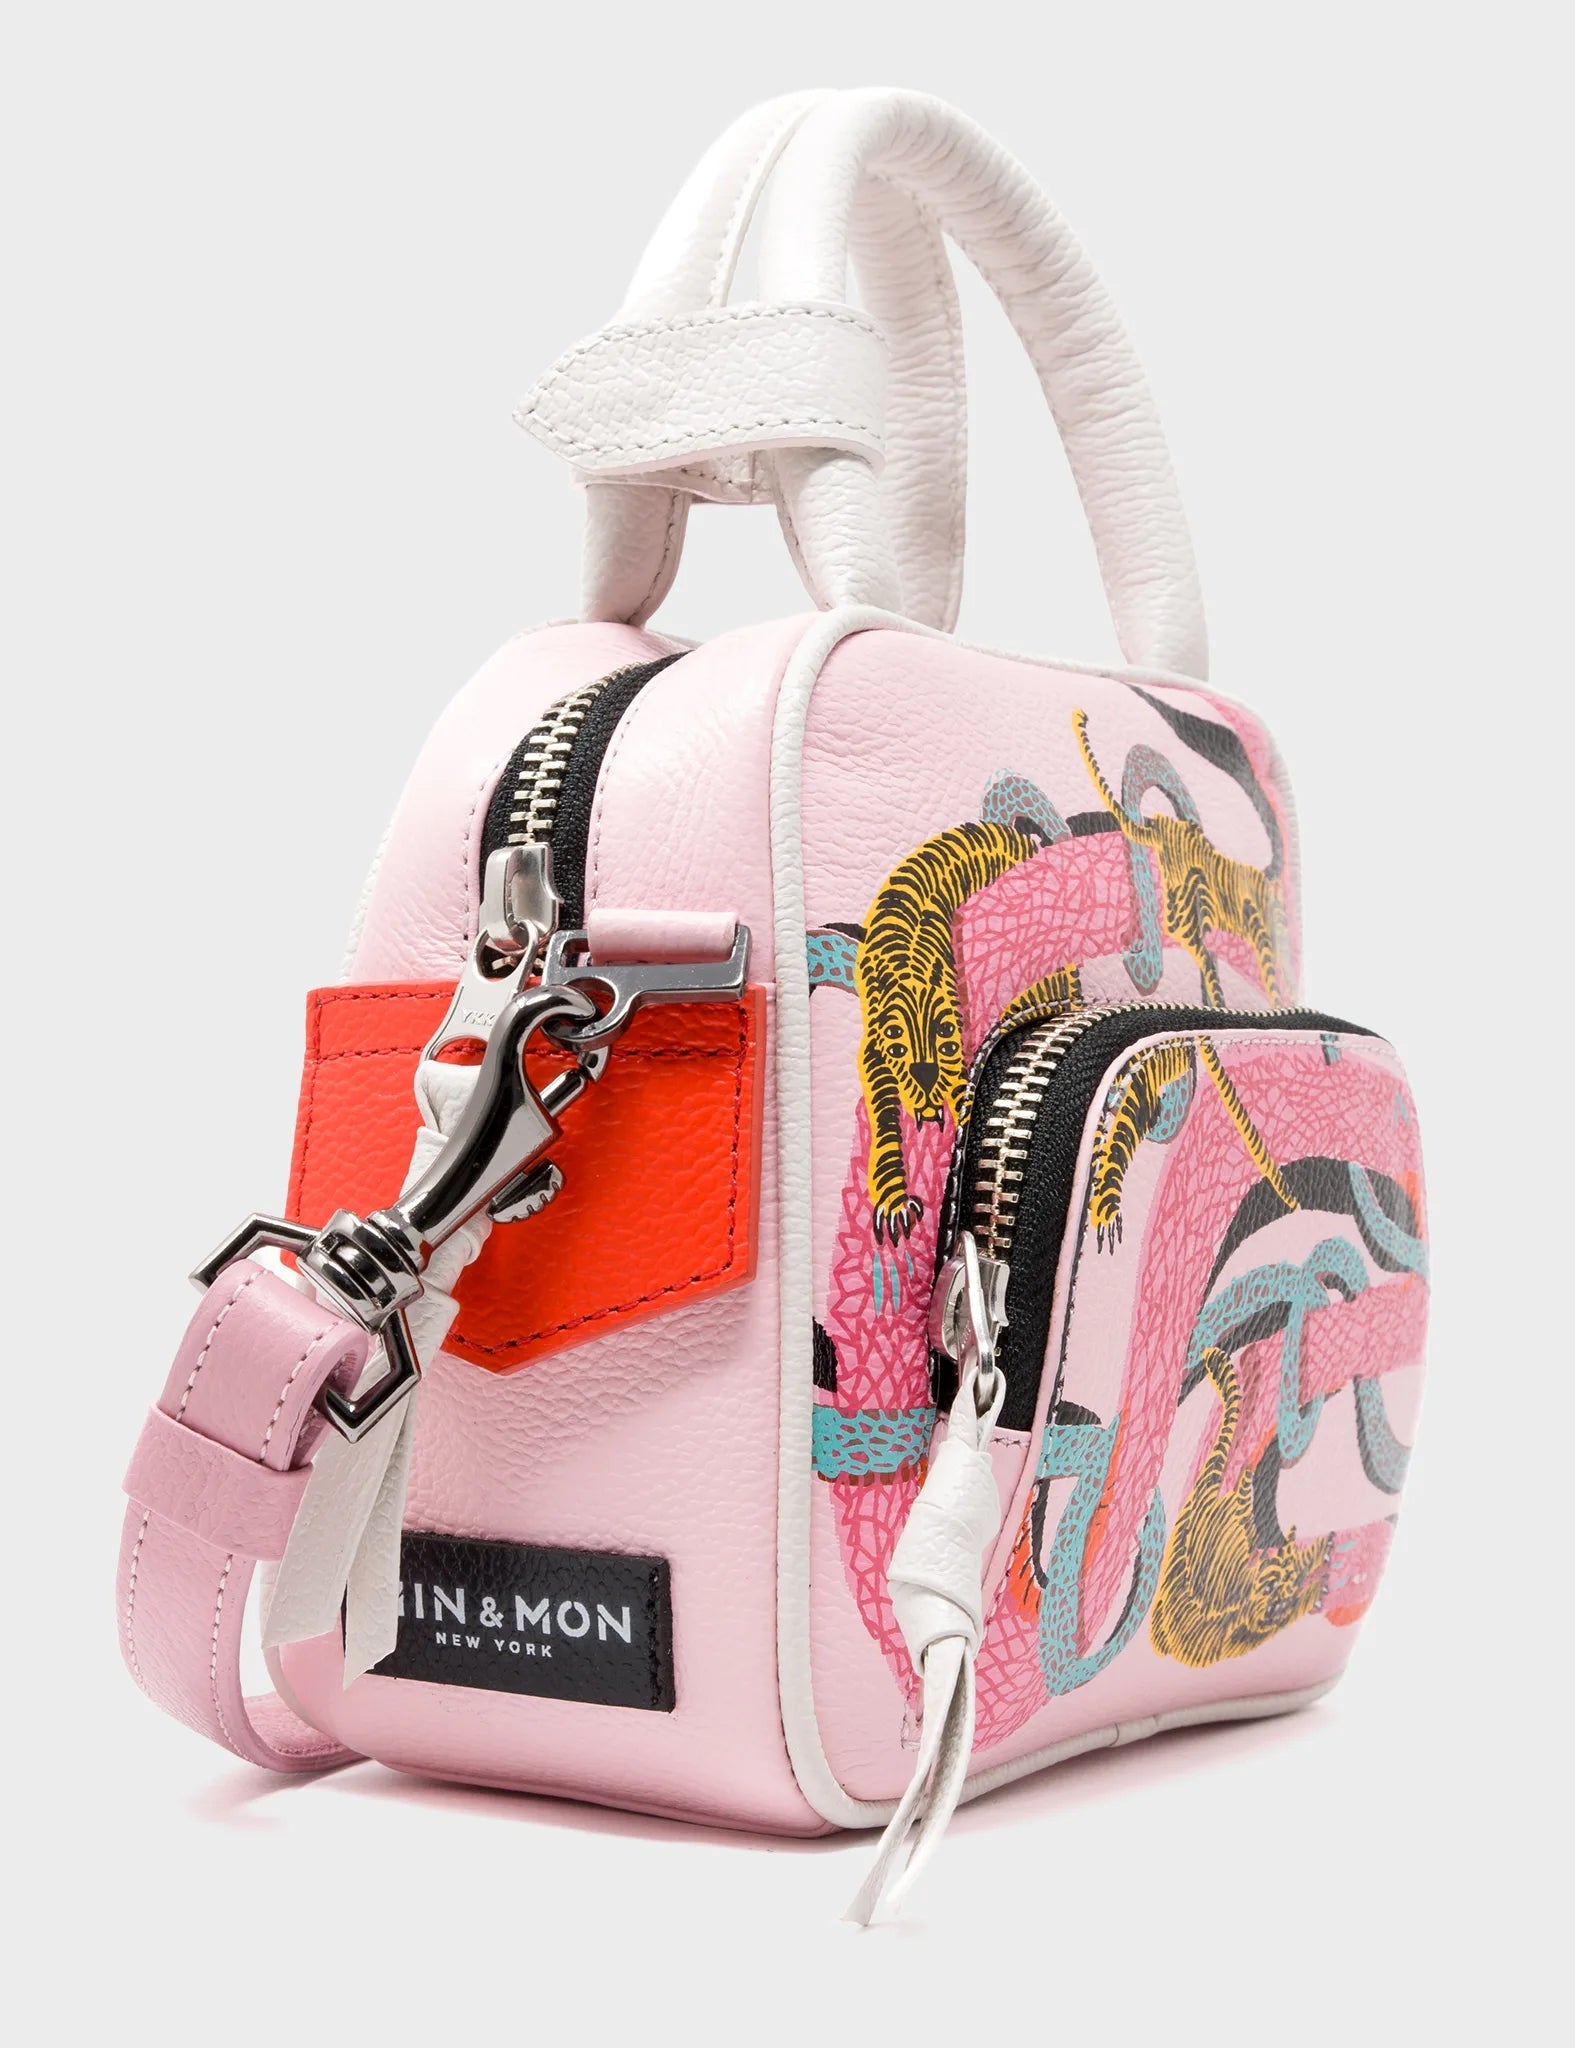 Small Crossbody Parfait Pink Leather Bag - Tangled Tiger & Snake Print Design - Side